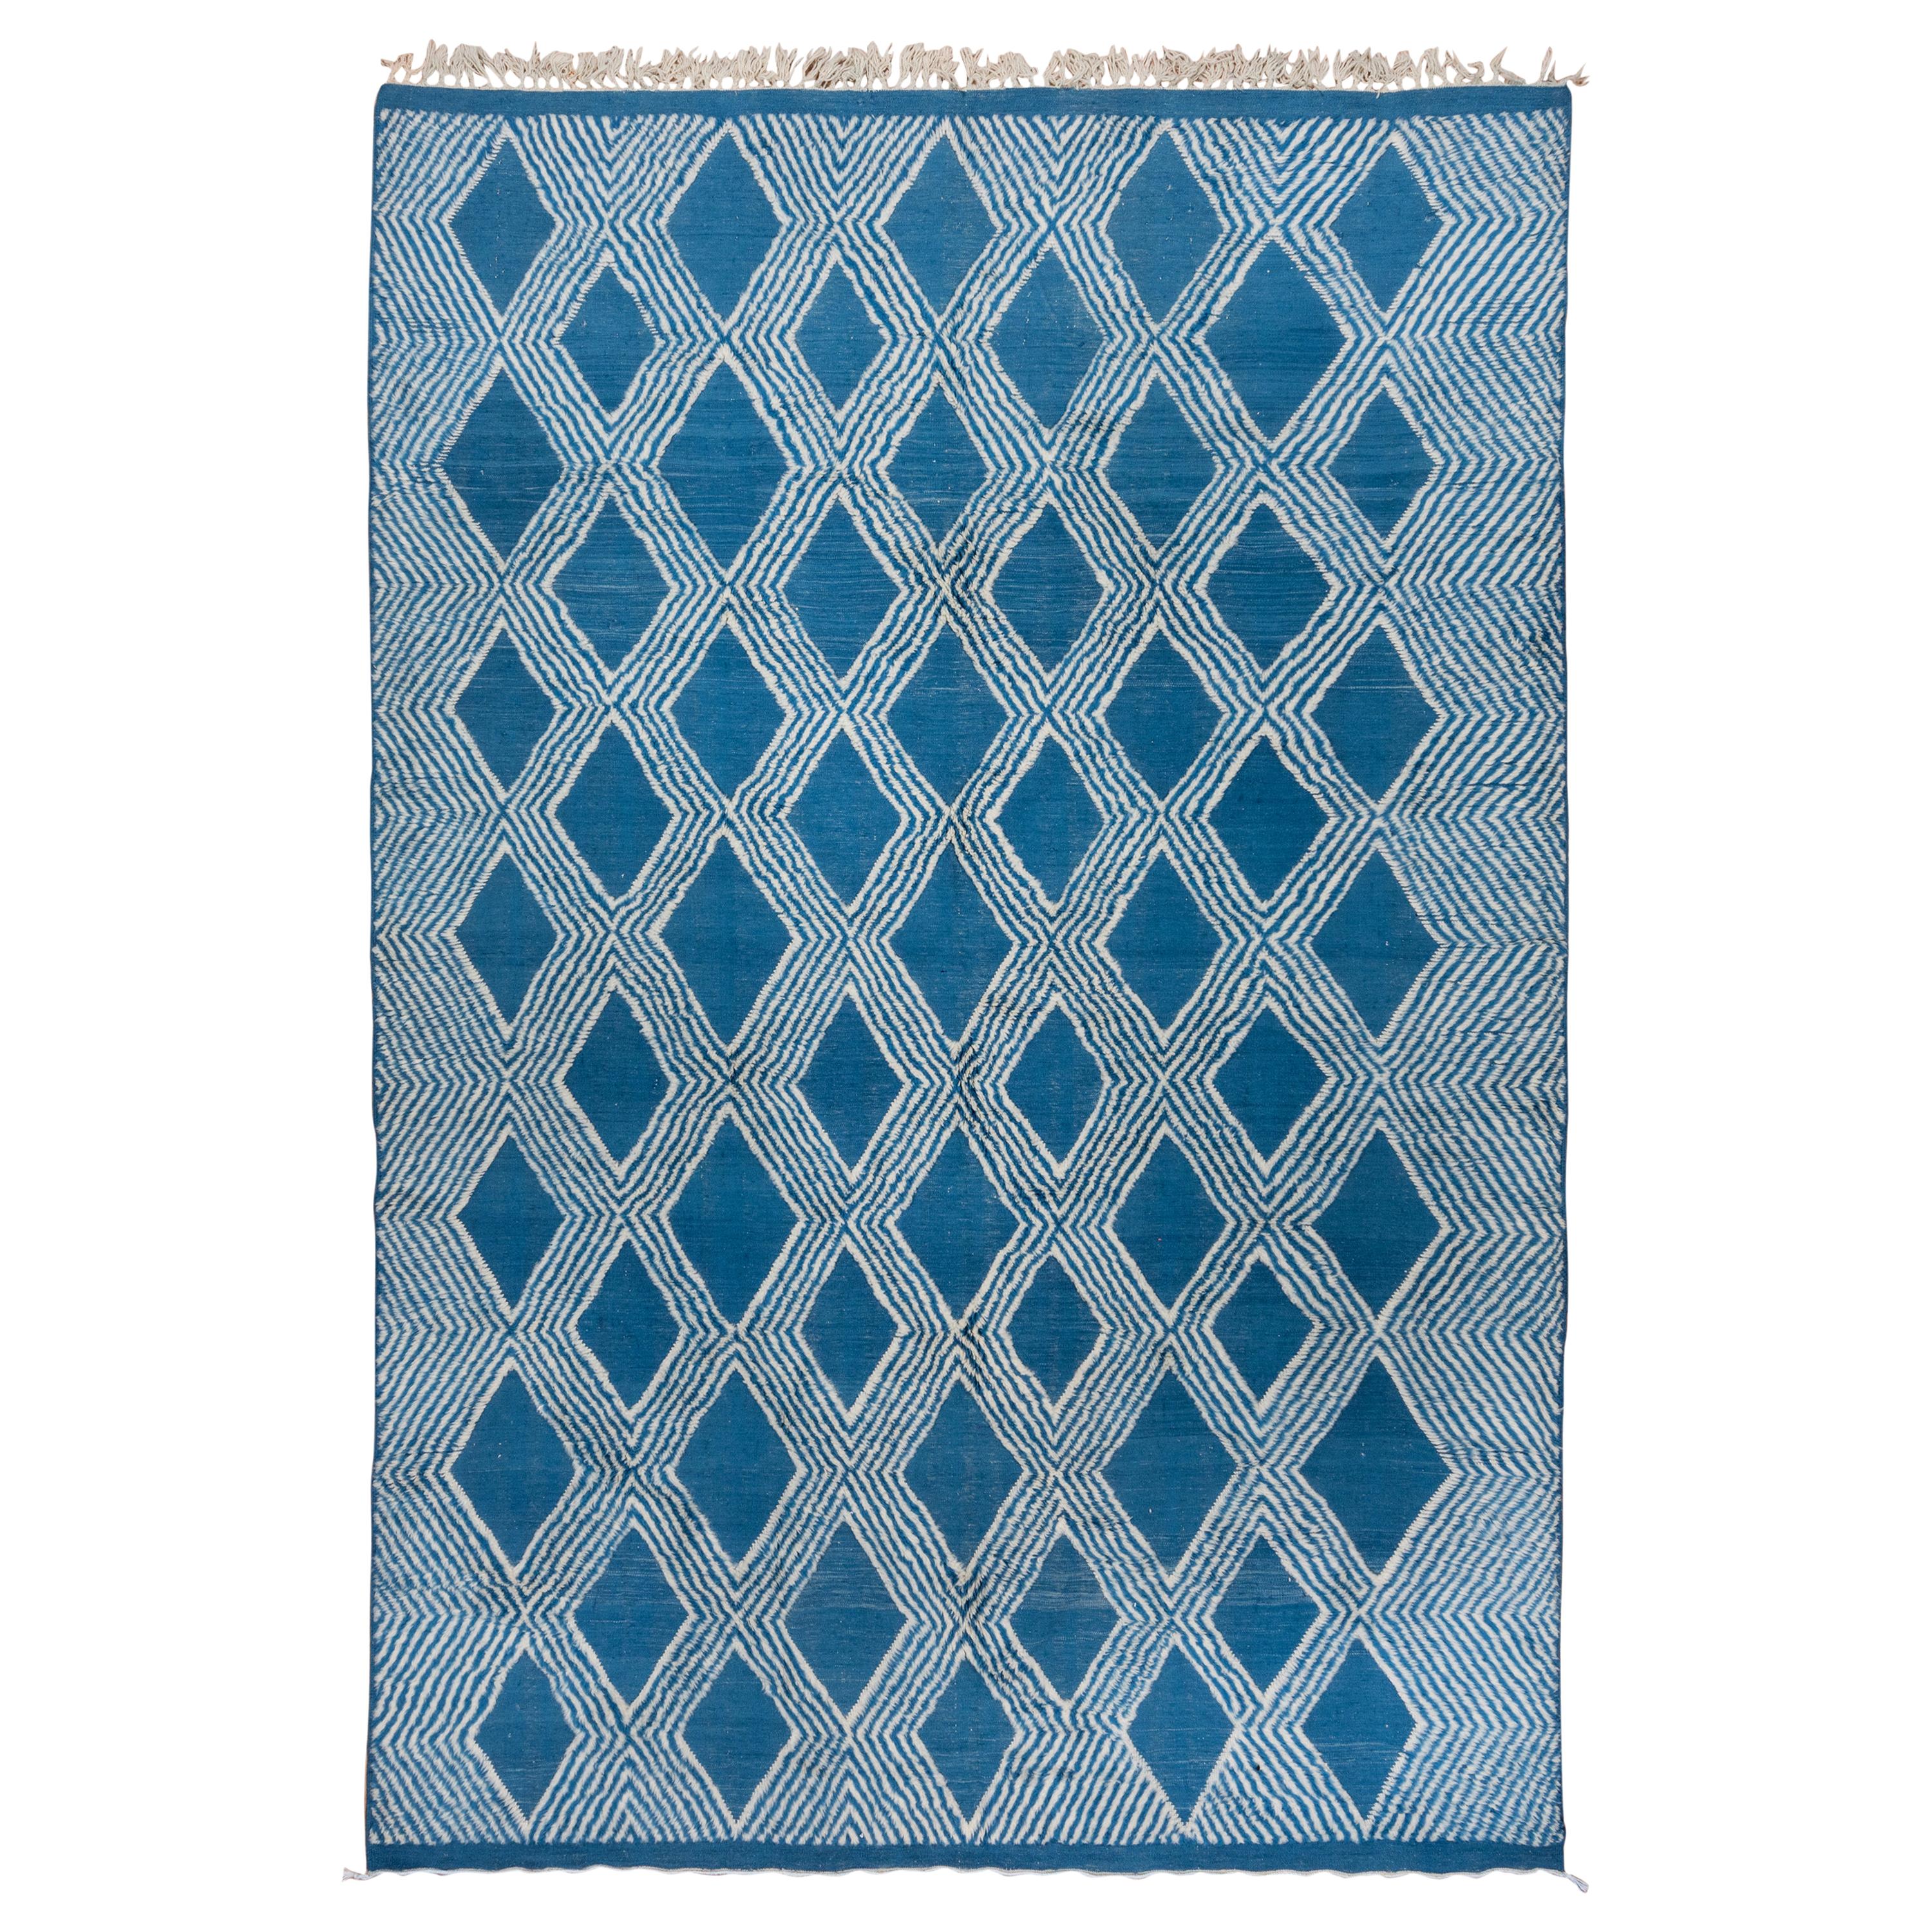 Blue Moroccan Carpet, High Low Pile, Royal Blue, Modern, Contemporary